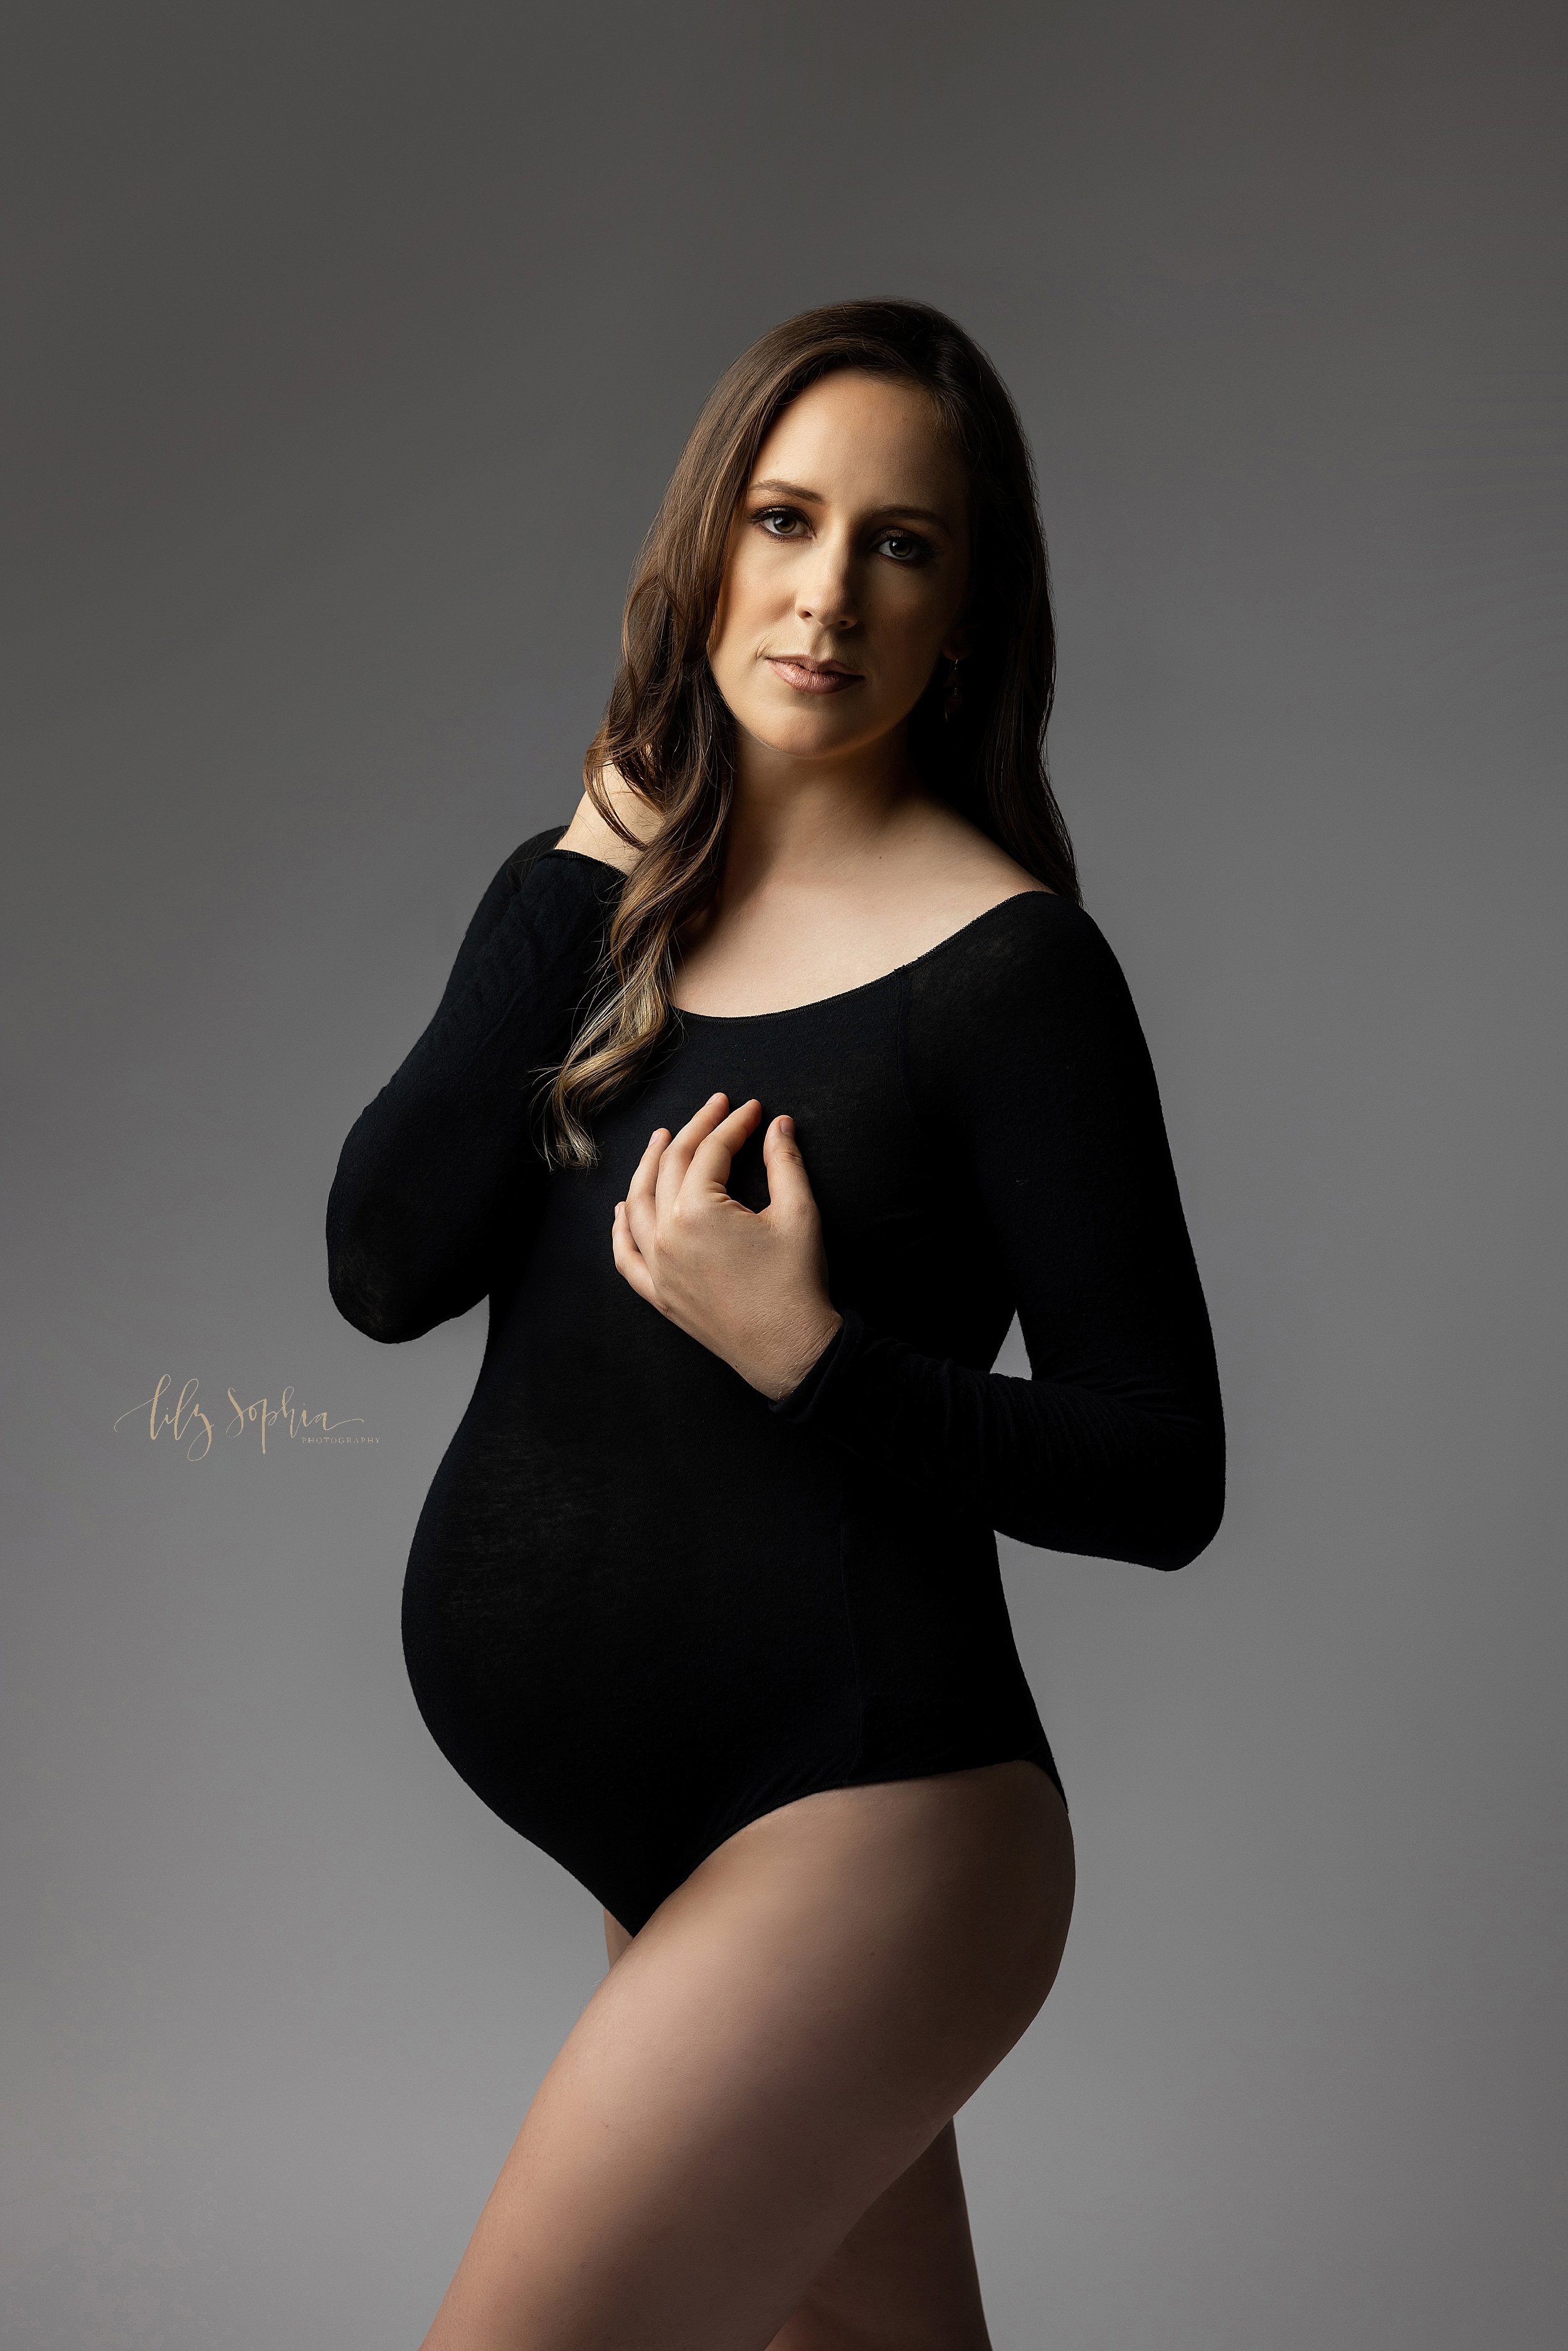 intown-atlanta-grant-park-kirkwood-decatur-modern-maternity-studio-fine-art-fashion-portraits-pregnancy-bodysuit-photos_0259.jpg